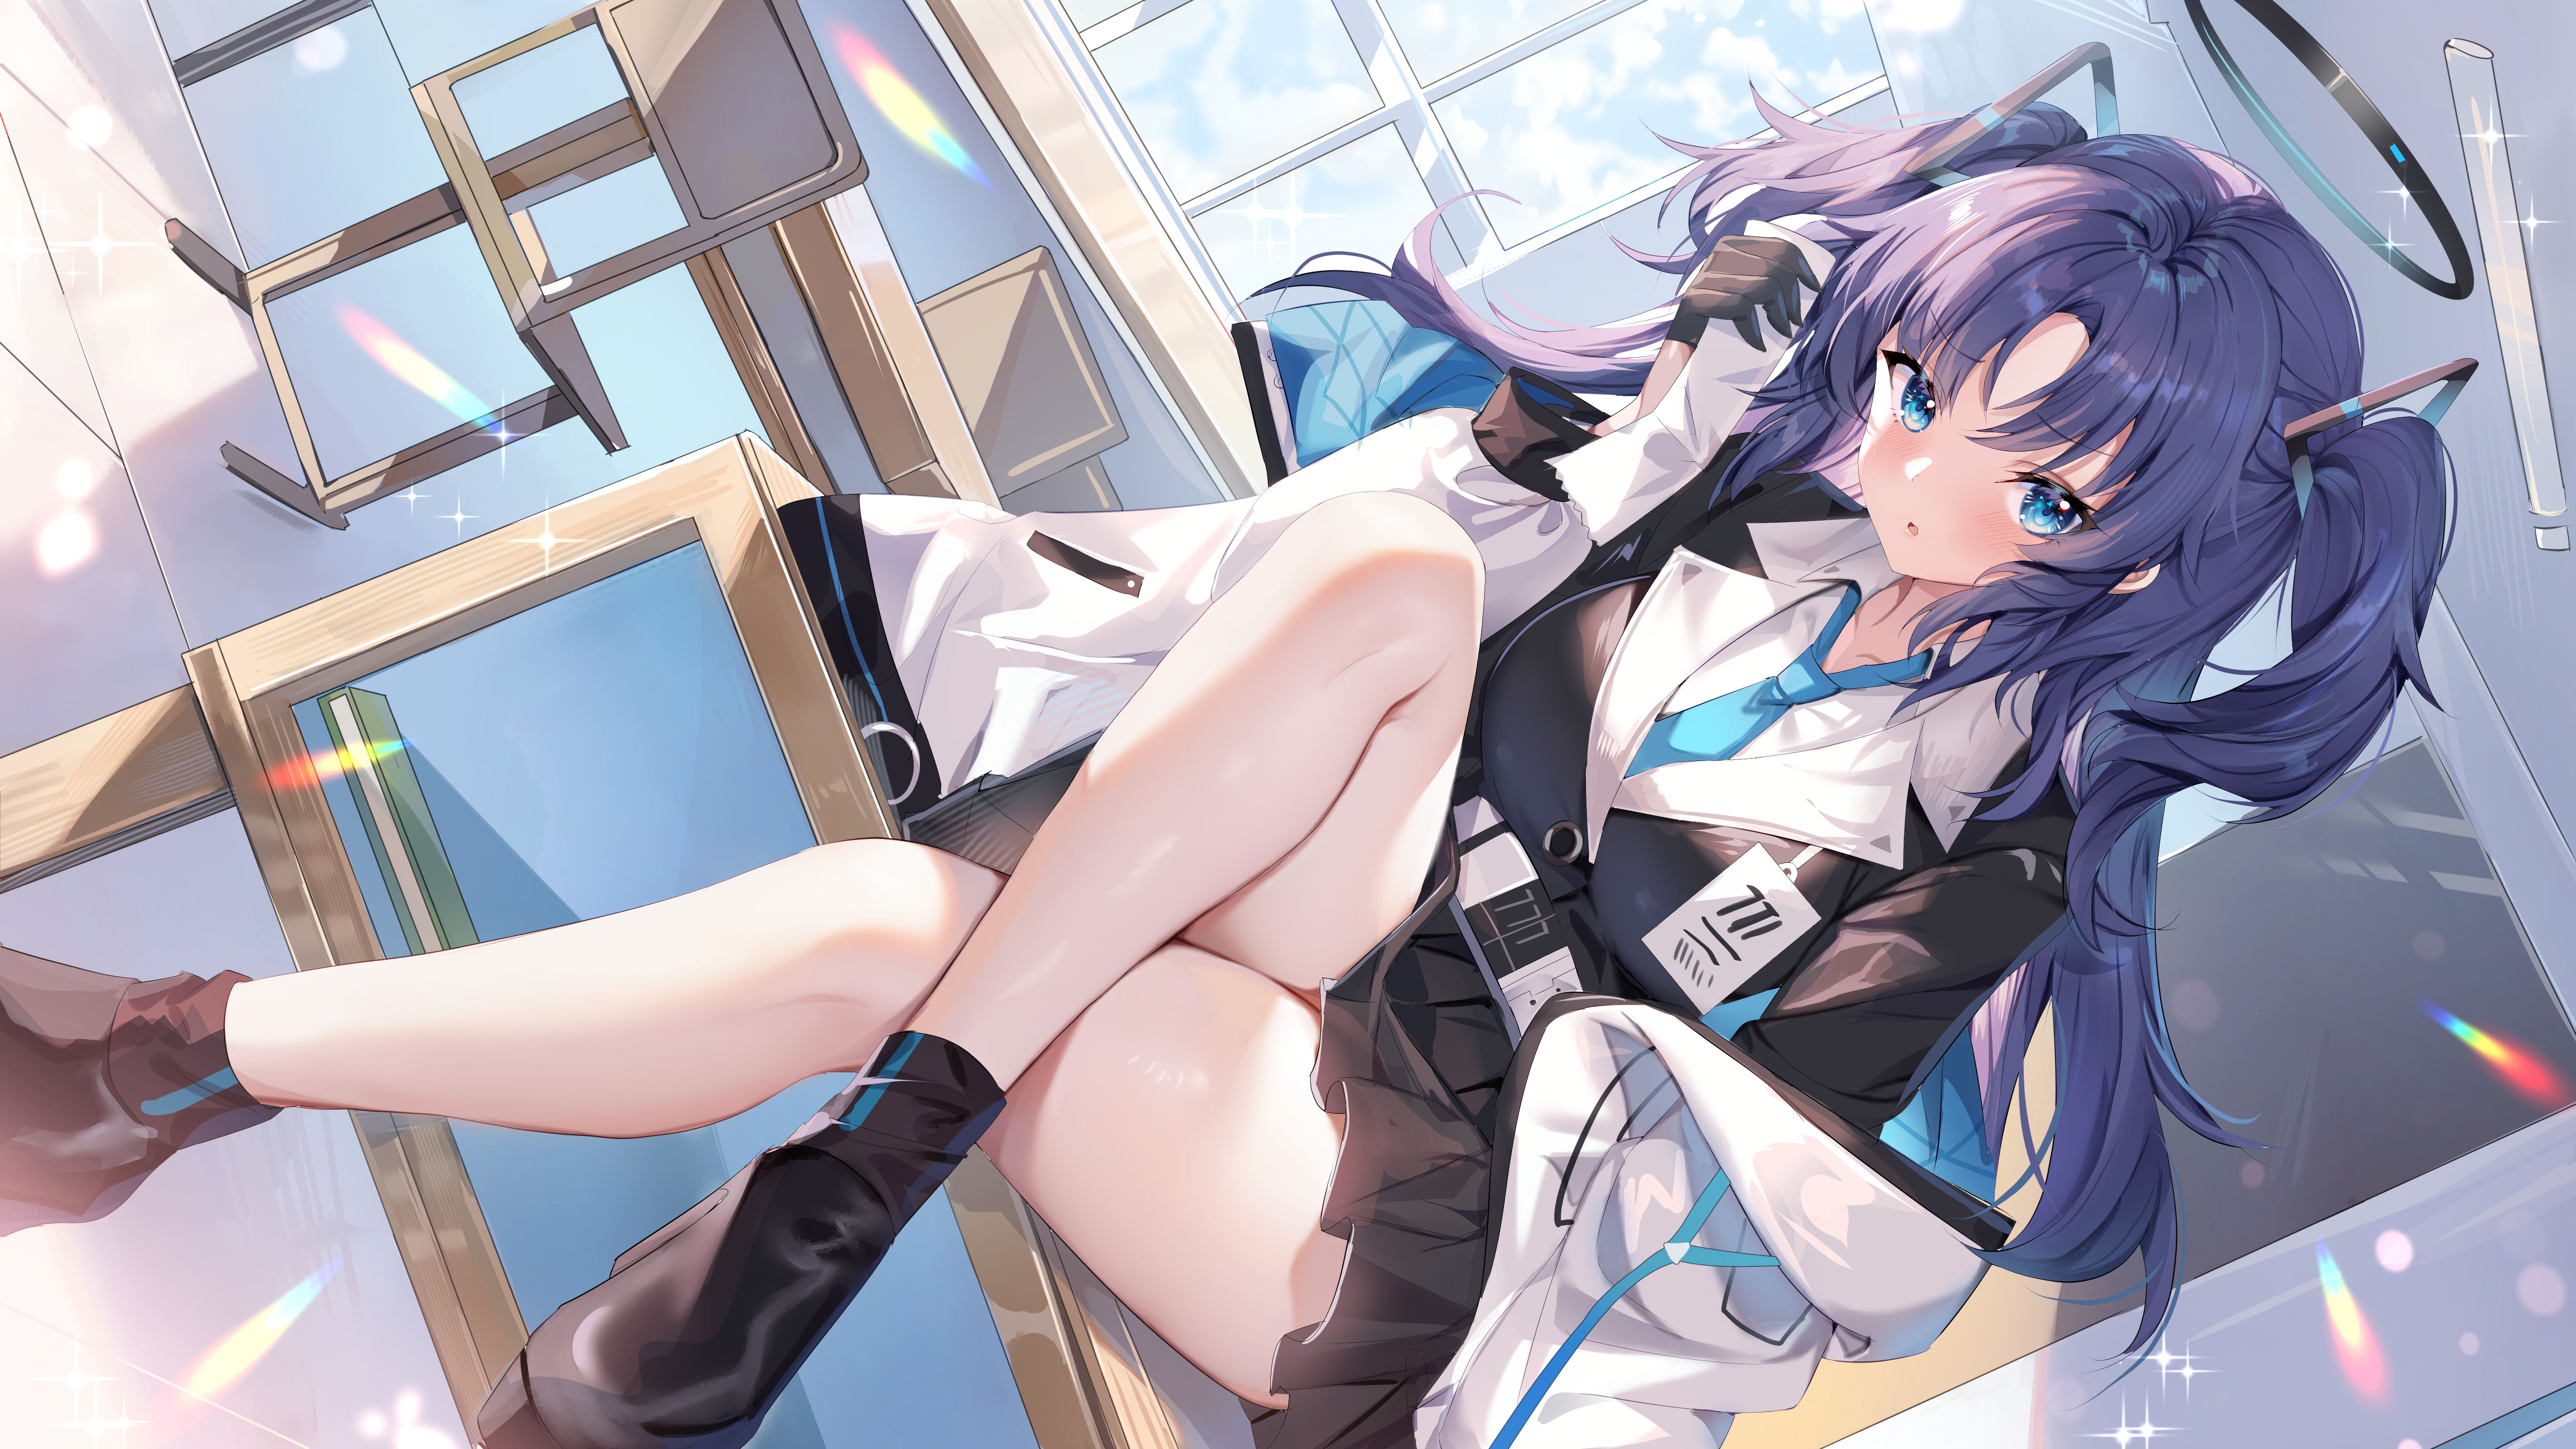 Pixiv Anime Anime Girls Long Hair Blue Archive Nimbus Sitting Legs Crossed Hayase Yuuka Desk School  6000x3376